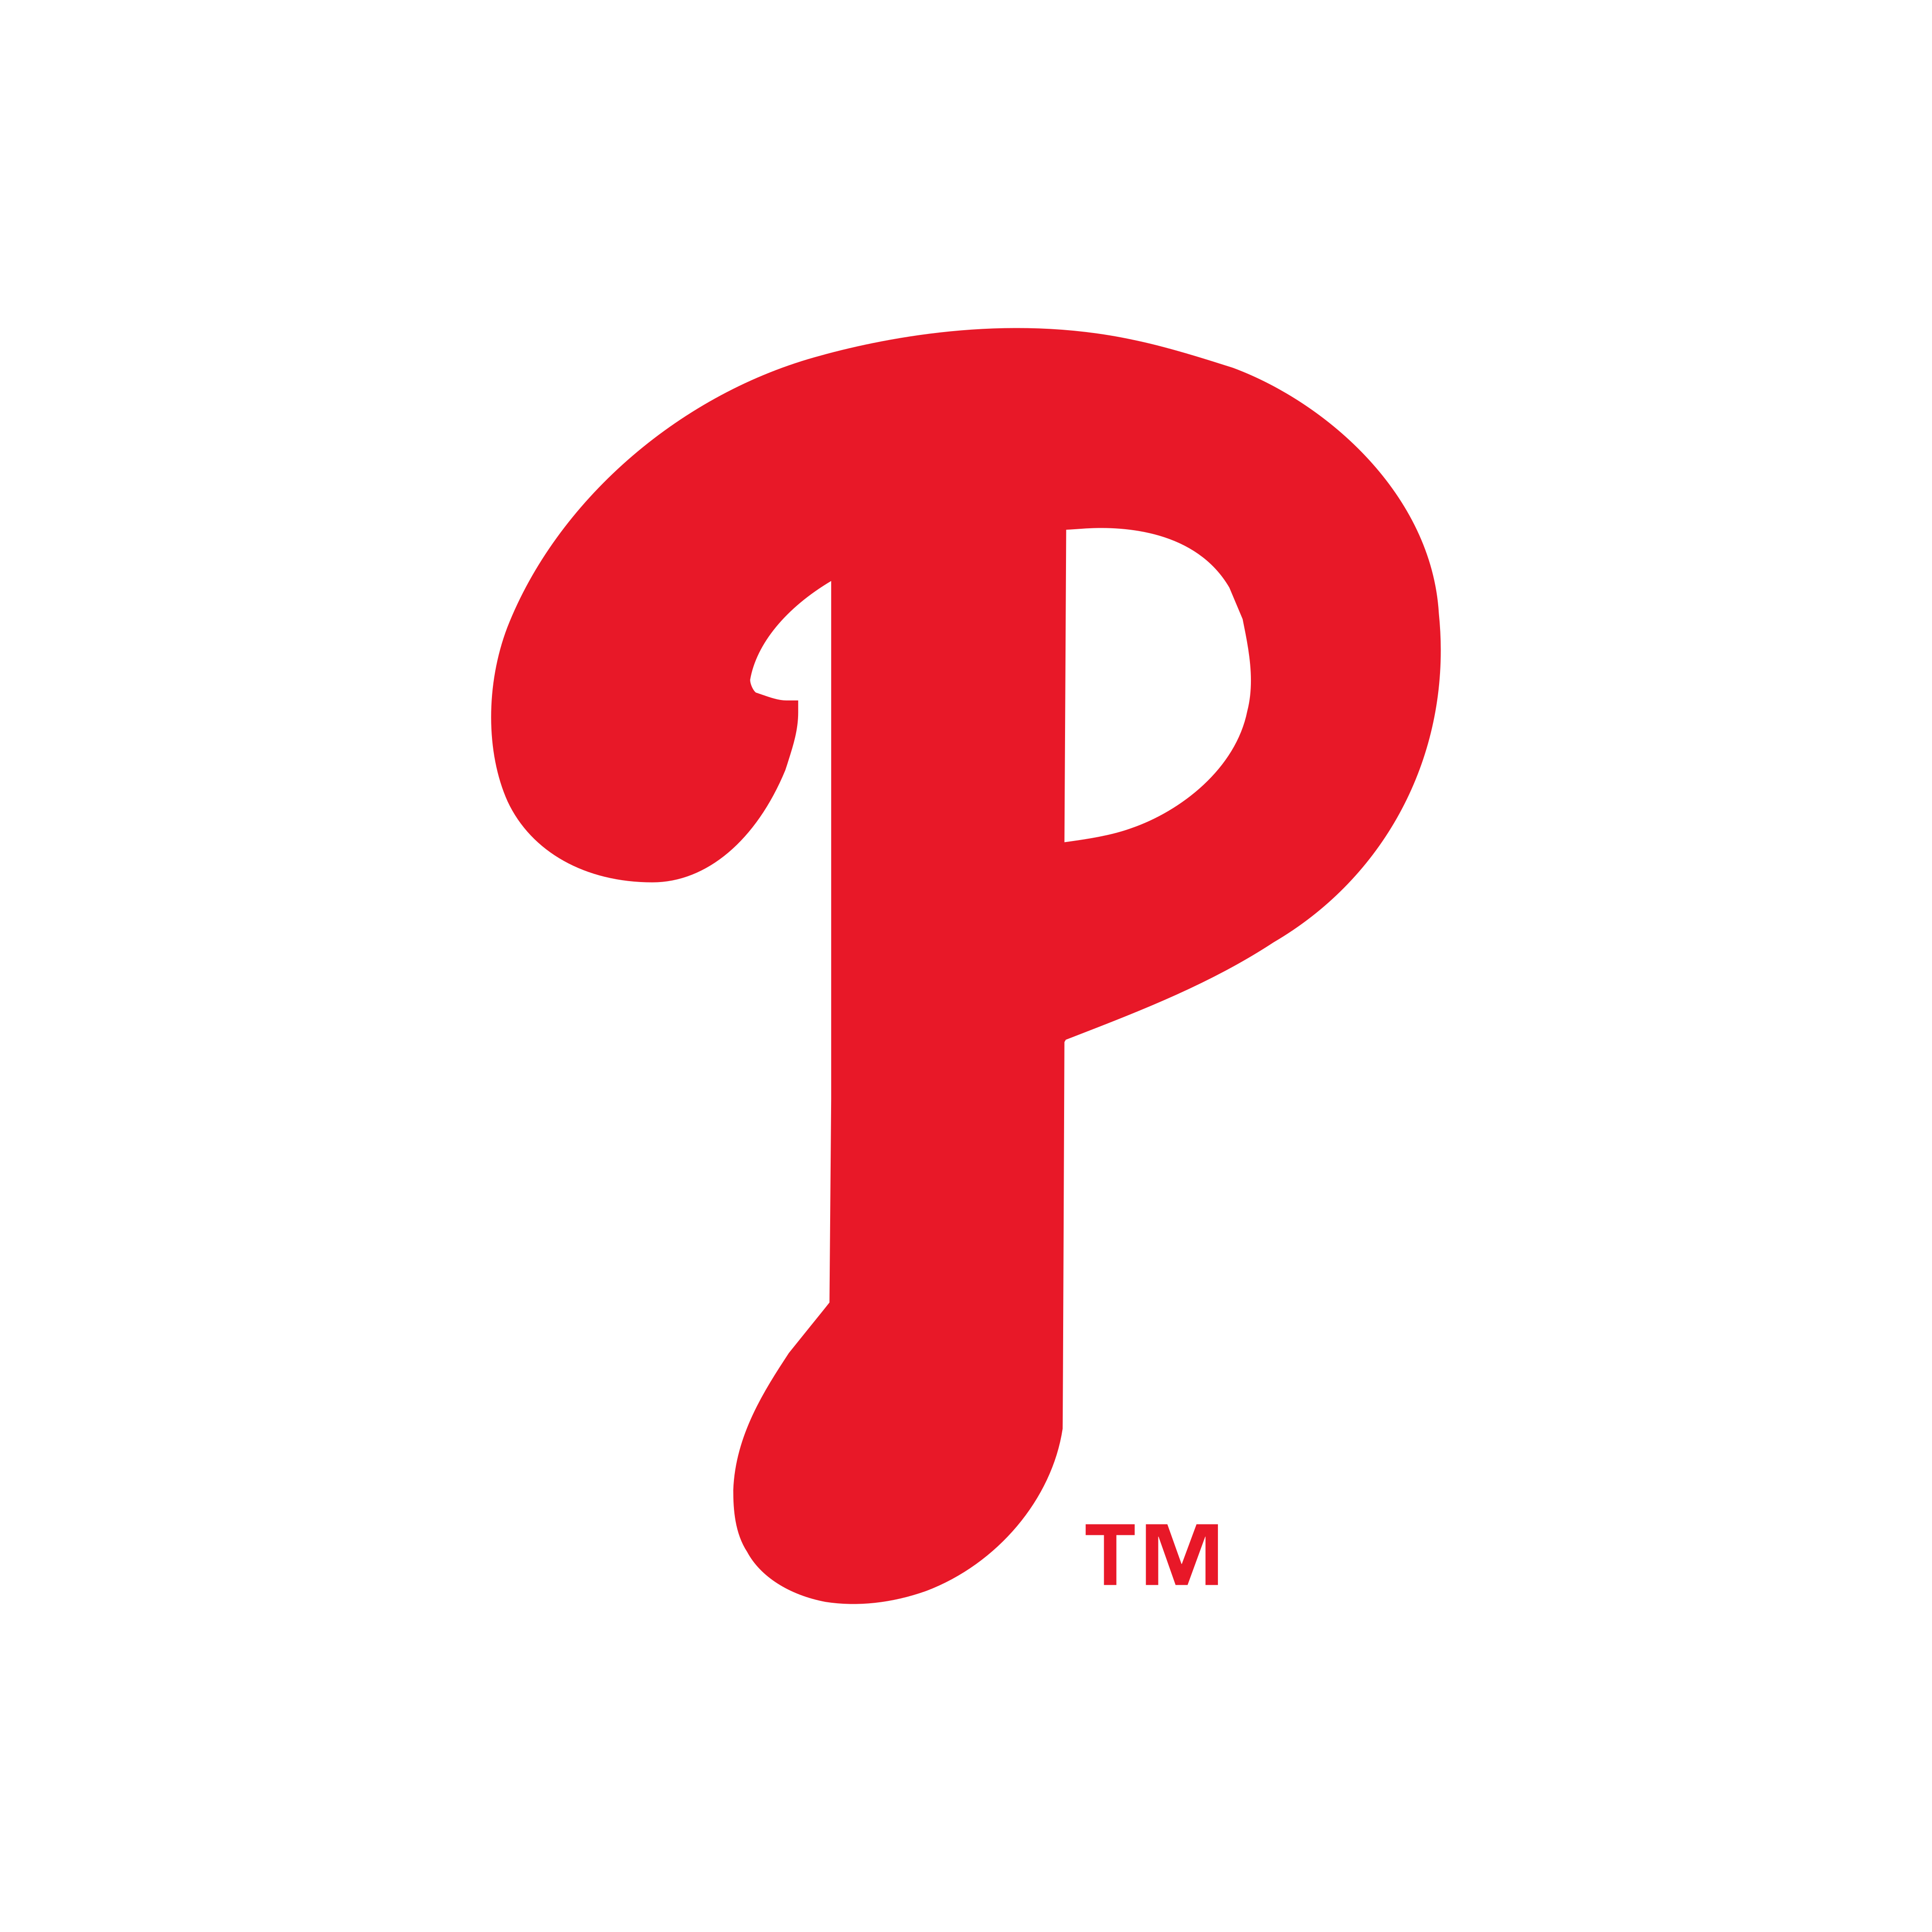 Phillies Logo PNG Image